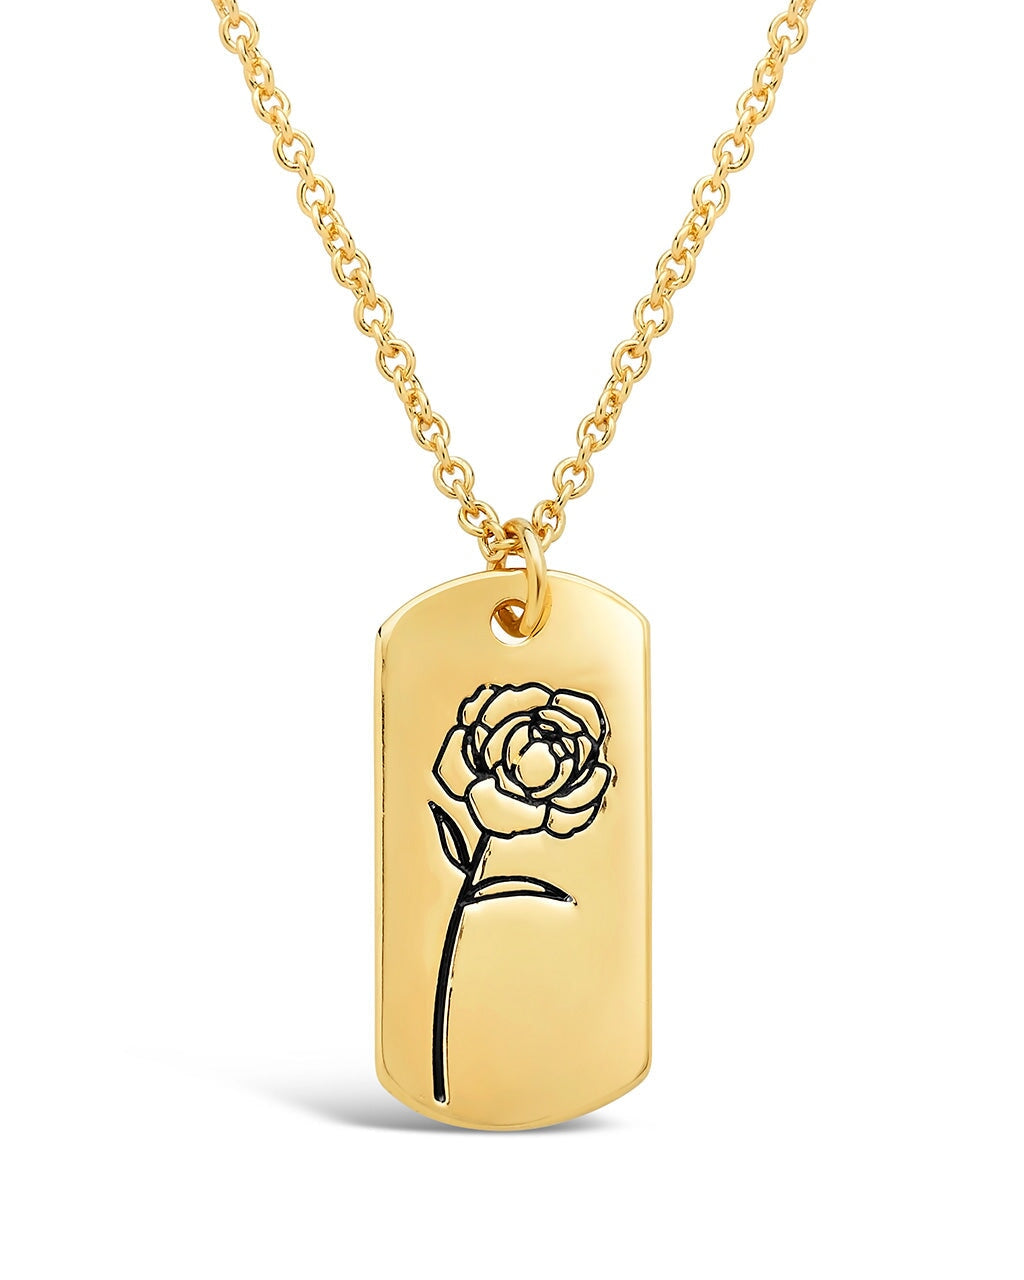 Birth Flower Pendant Necklace Sterling Forever Gold September / Peony 